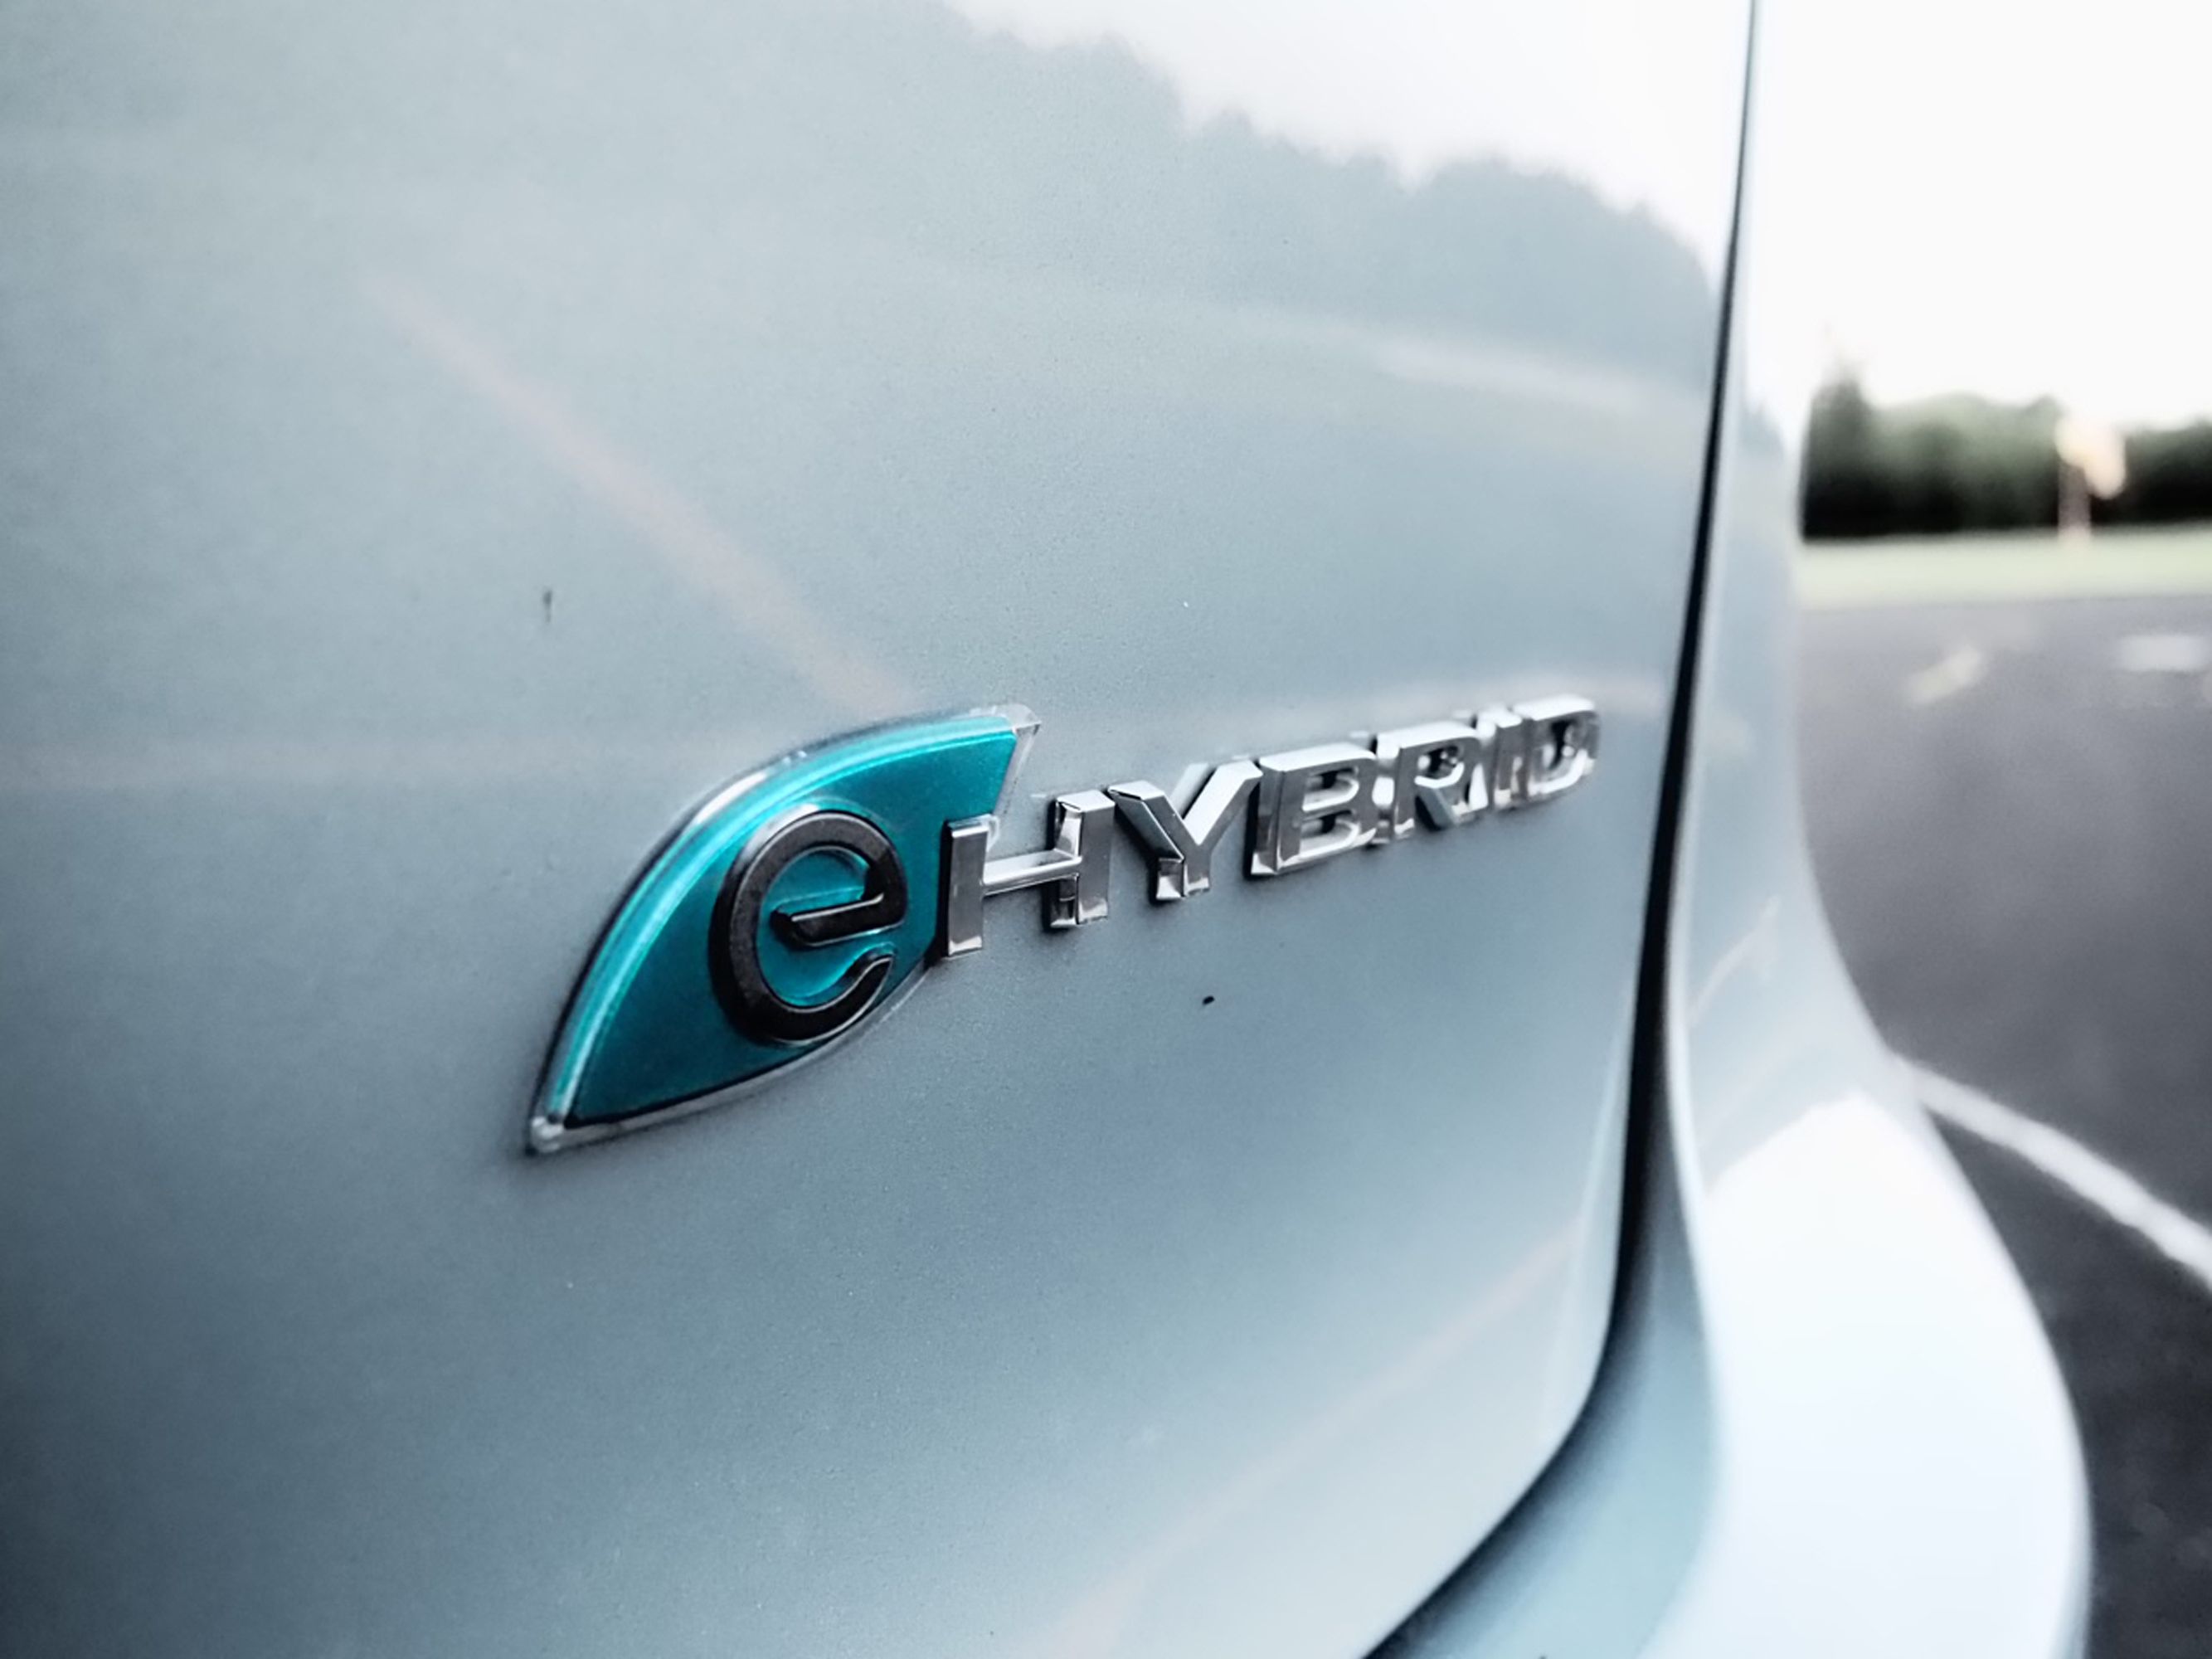 2018 Chrysler Pacifica Hybrid - Driven